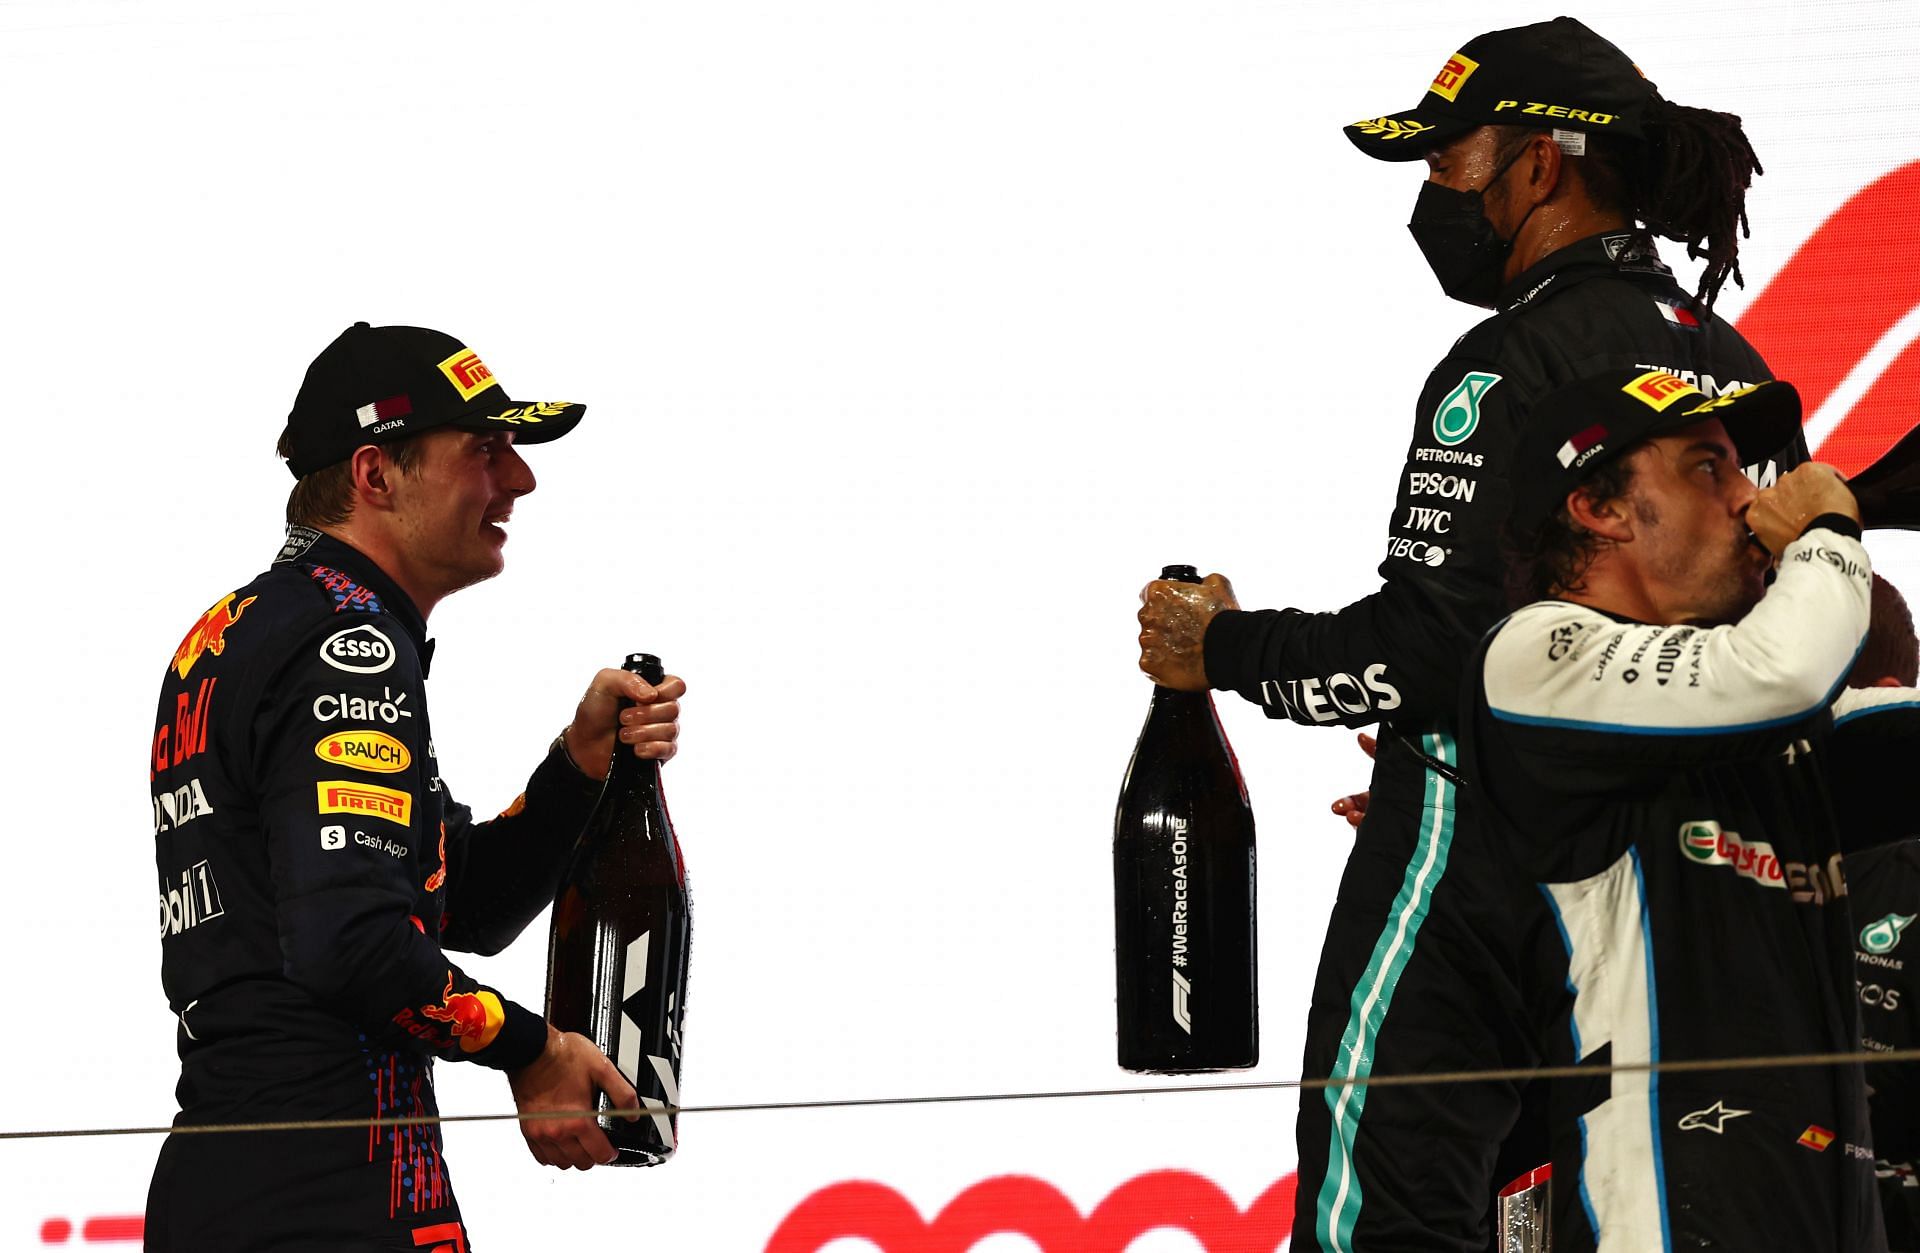 F1 Grand Prix of Qatar - Max Verstappen (L) and Lewis Hamilton celebrate on the podium.